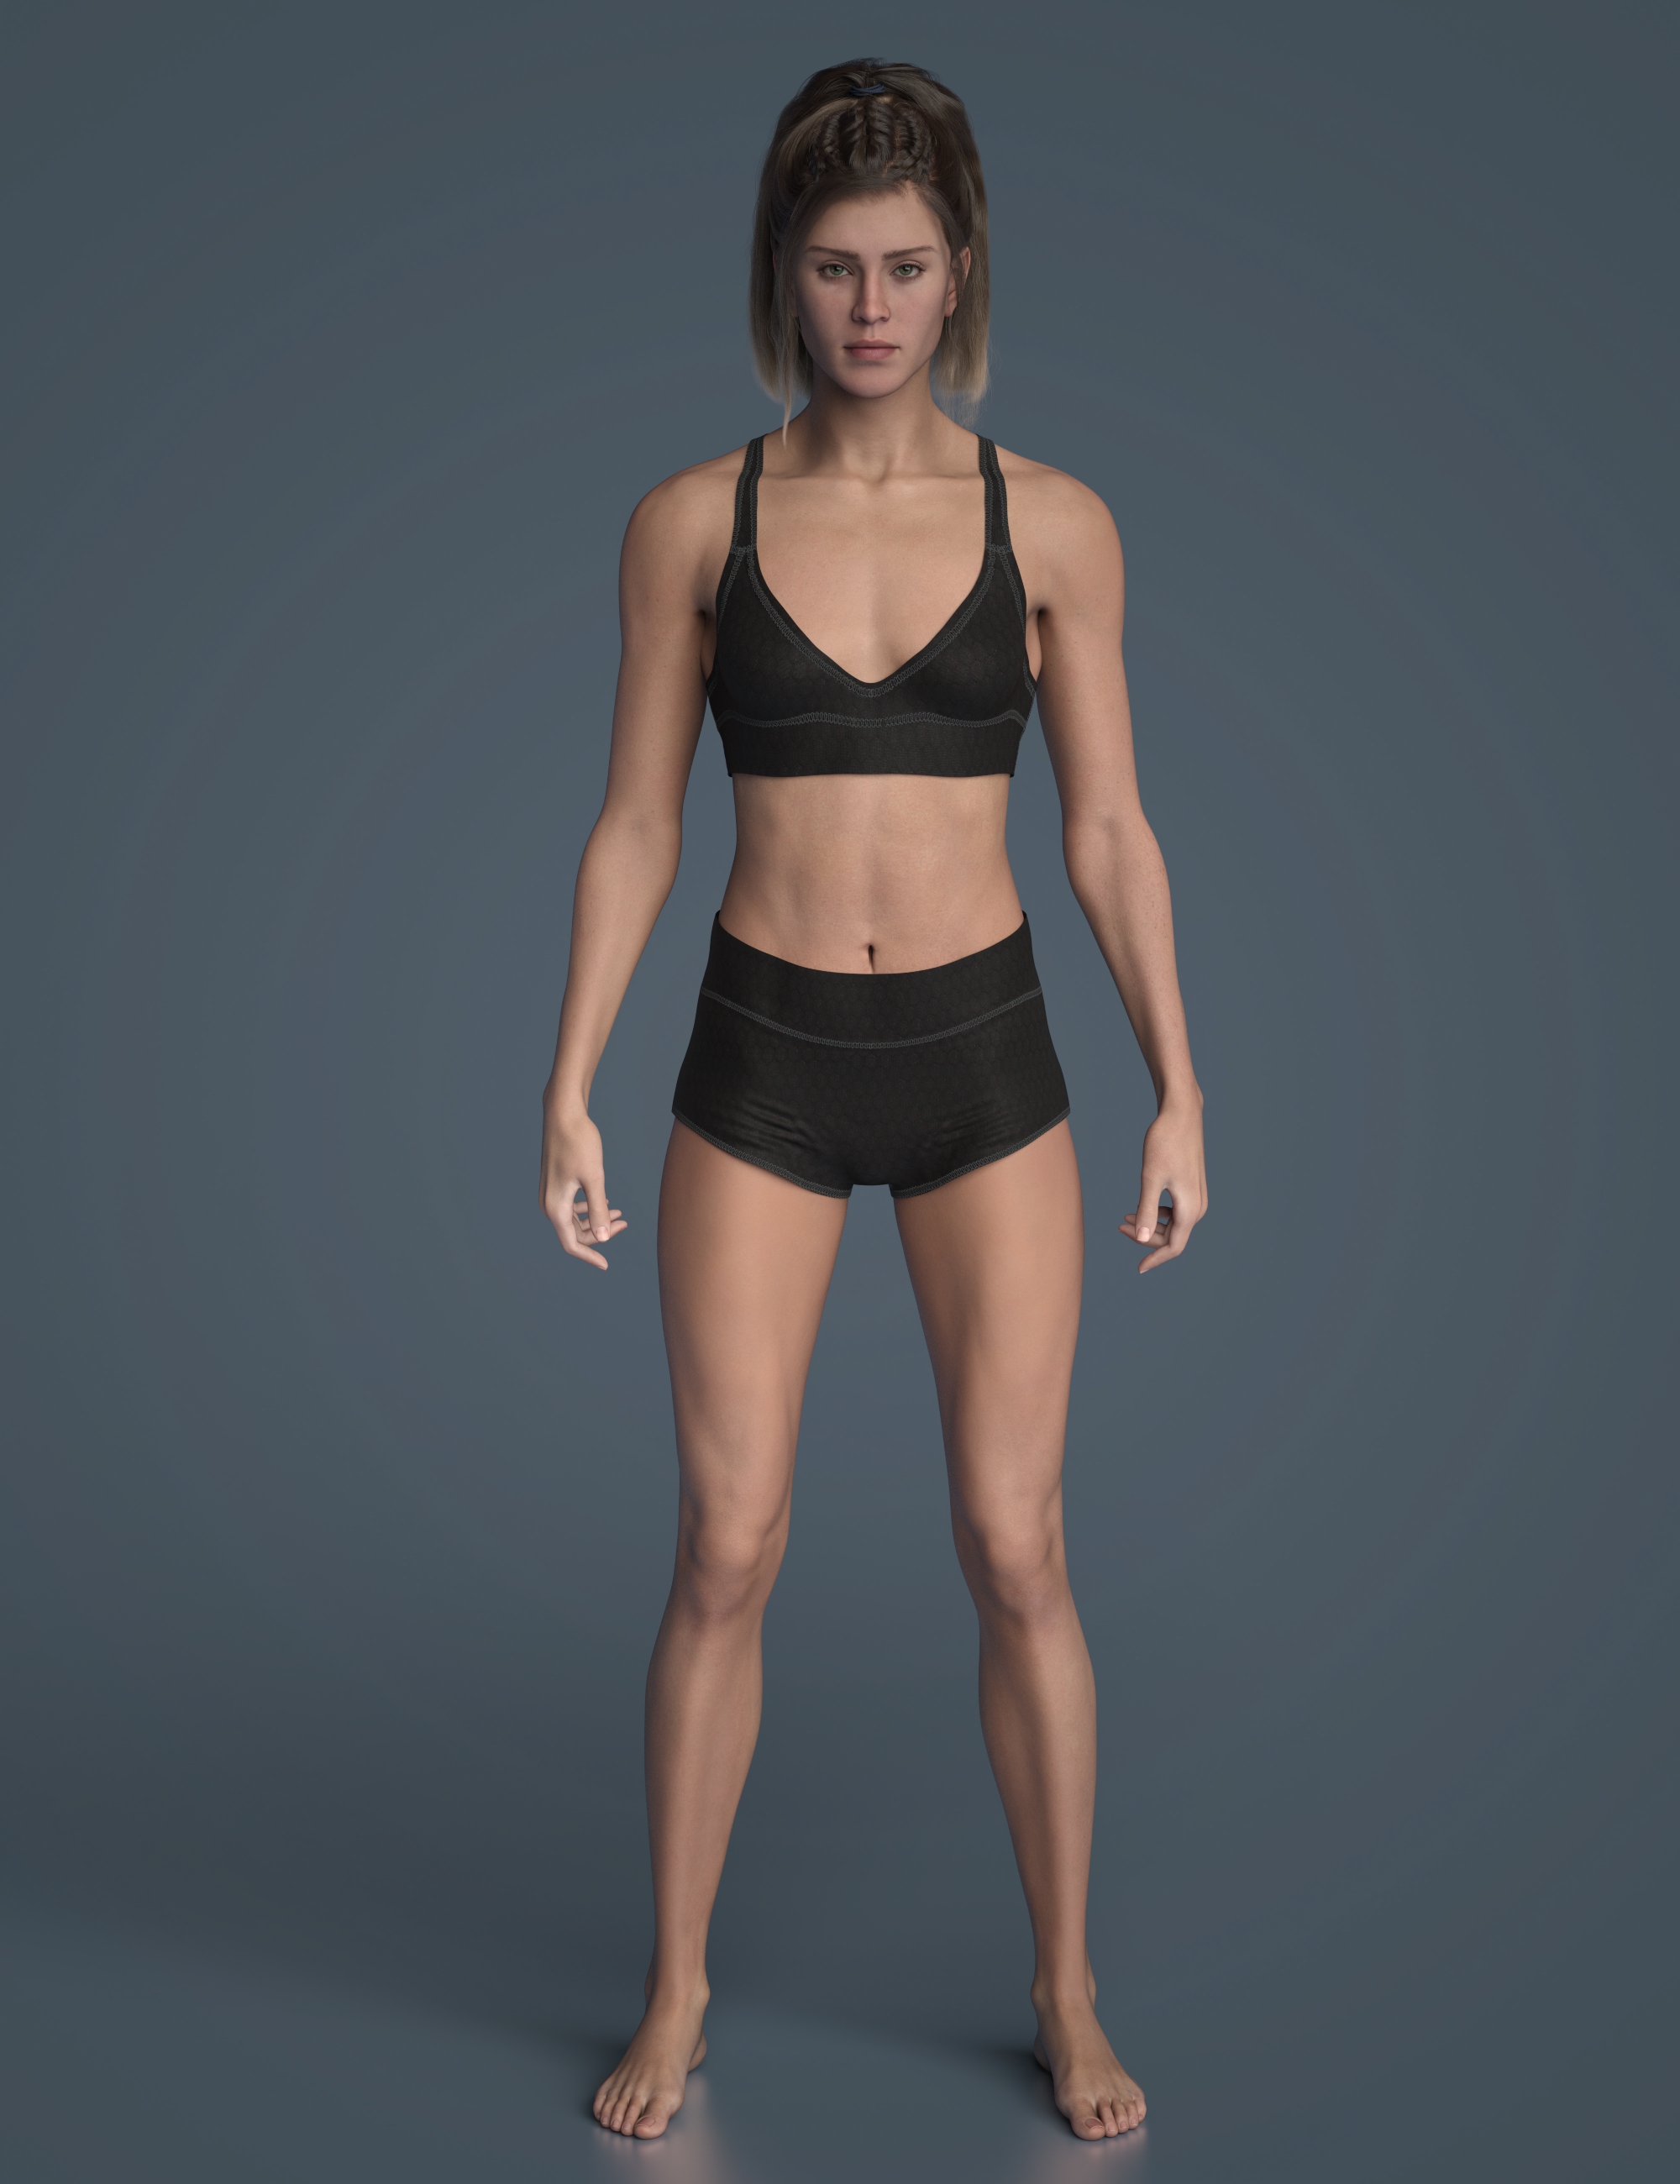 Tabitha 9 Athletic HD Shape Add-On by: , 3D Models by Daz 3D